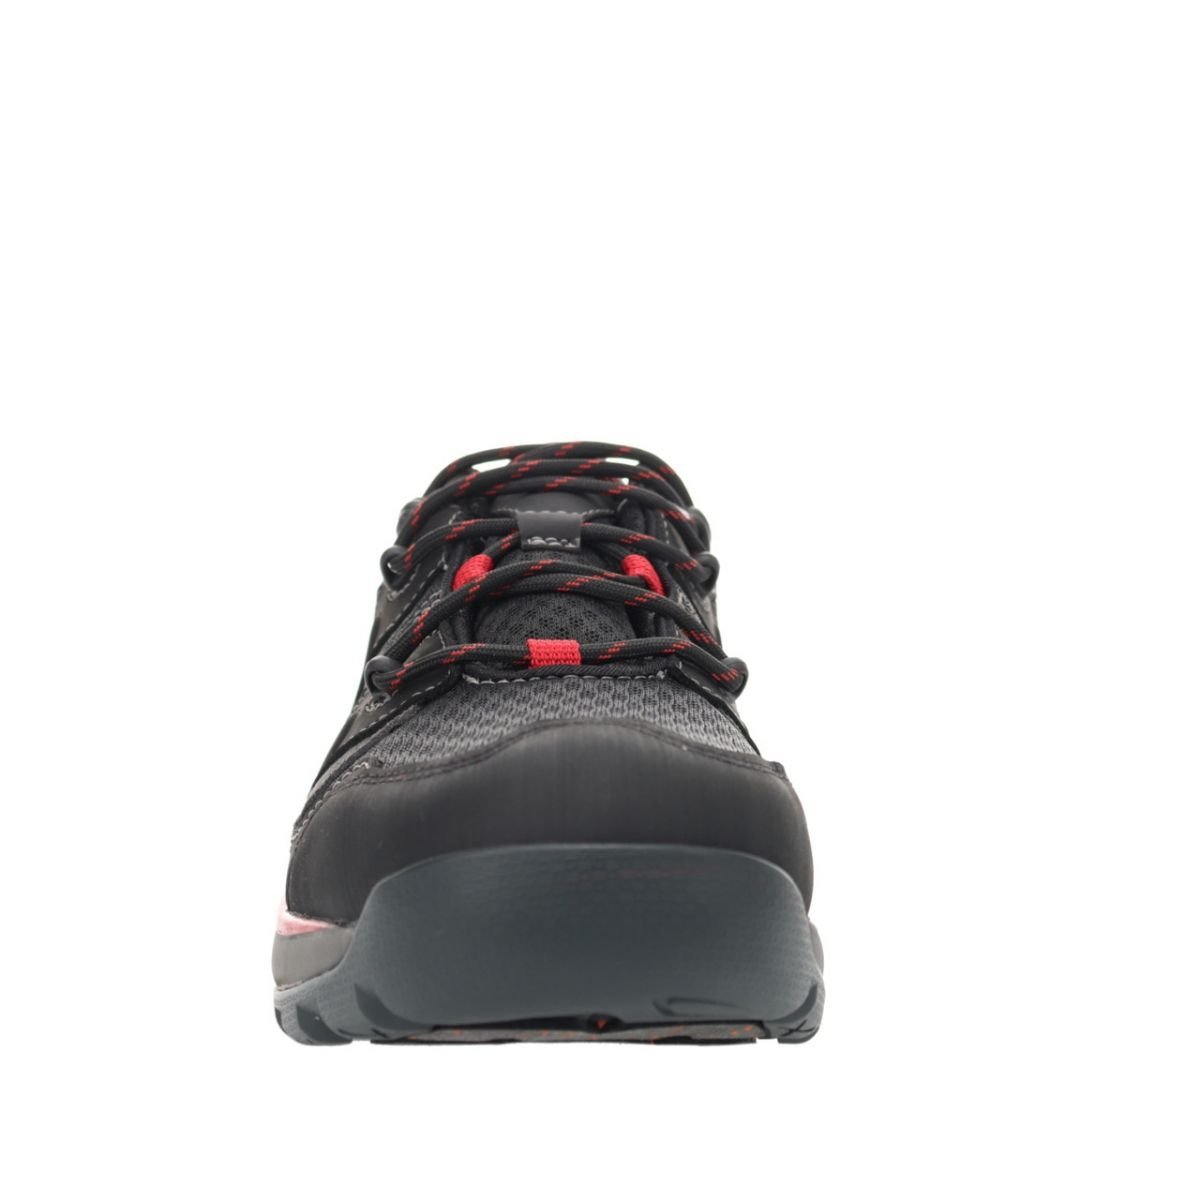 Propet Men's Vercors Hiking Shoe Black/Red - MOA002SBRD BLACK/RED - BLACK/RED, 8.5 XX-Wide